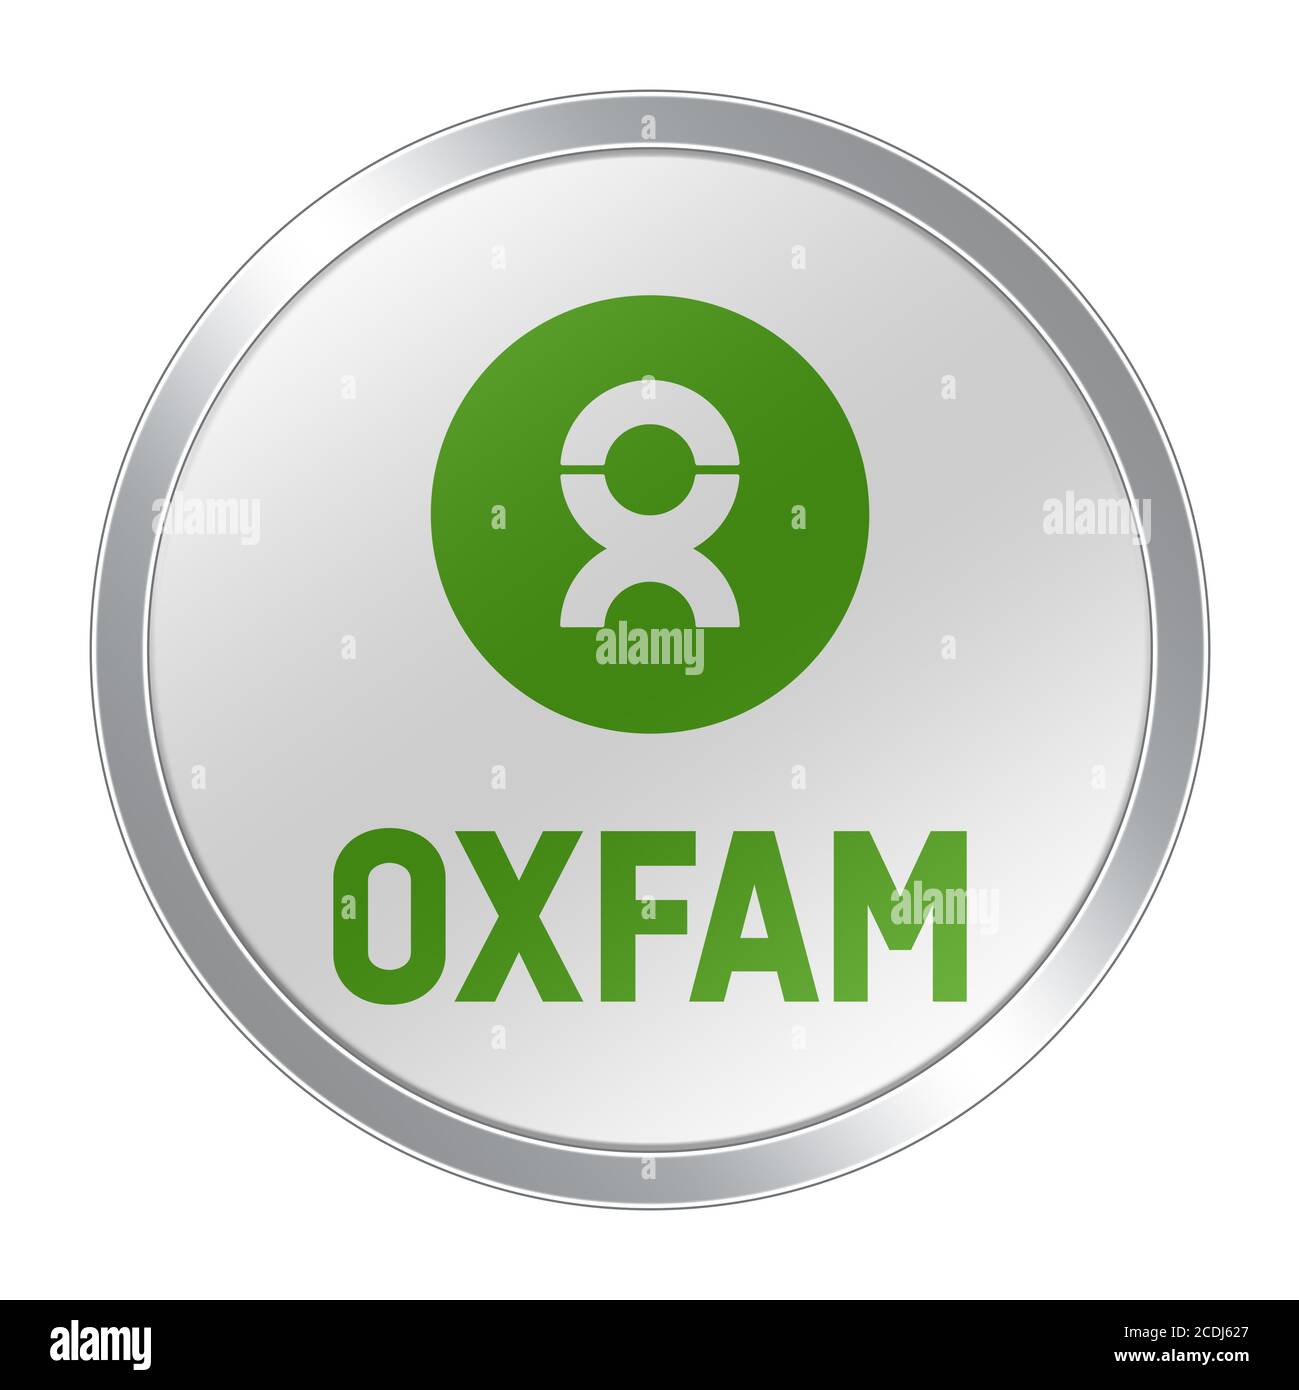 Oxfam logo Stock Photo